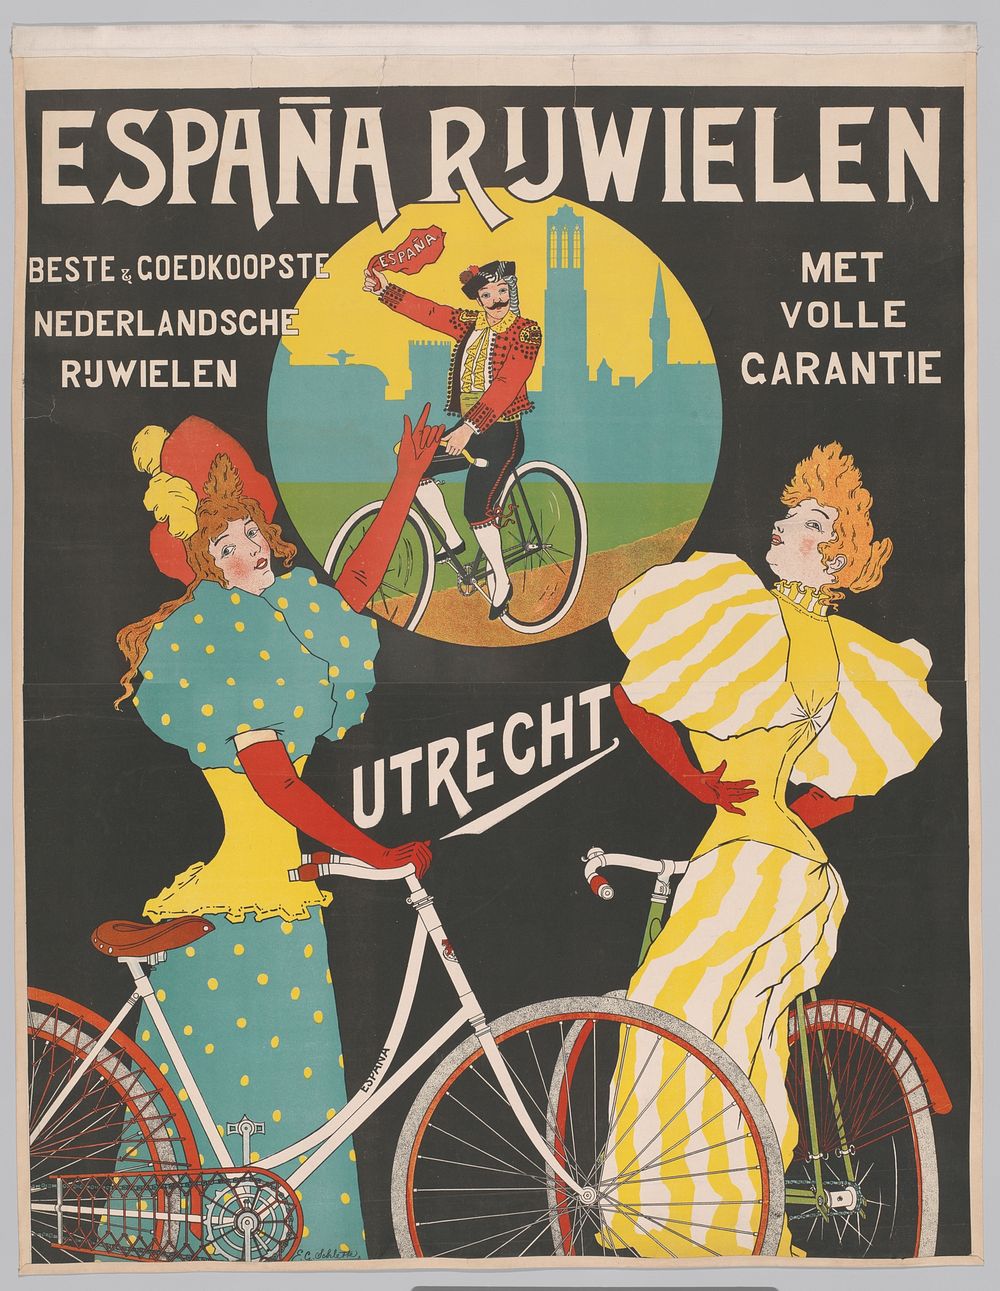 Espana rijwielen. Beste & goedkoopste Nederlandsche rijwielen met volle garantie (c. 1912) by Ernst Gustaaf Schlette